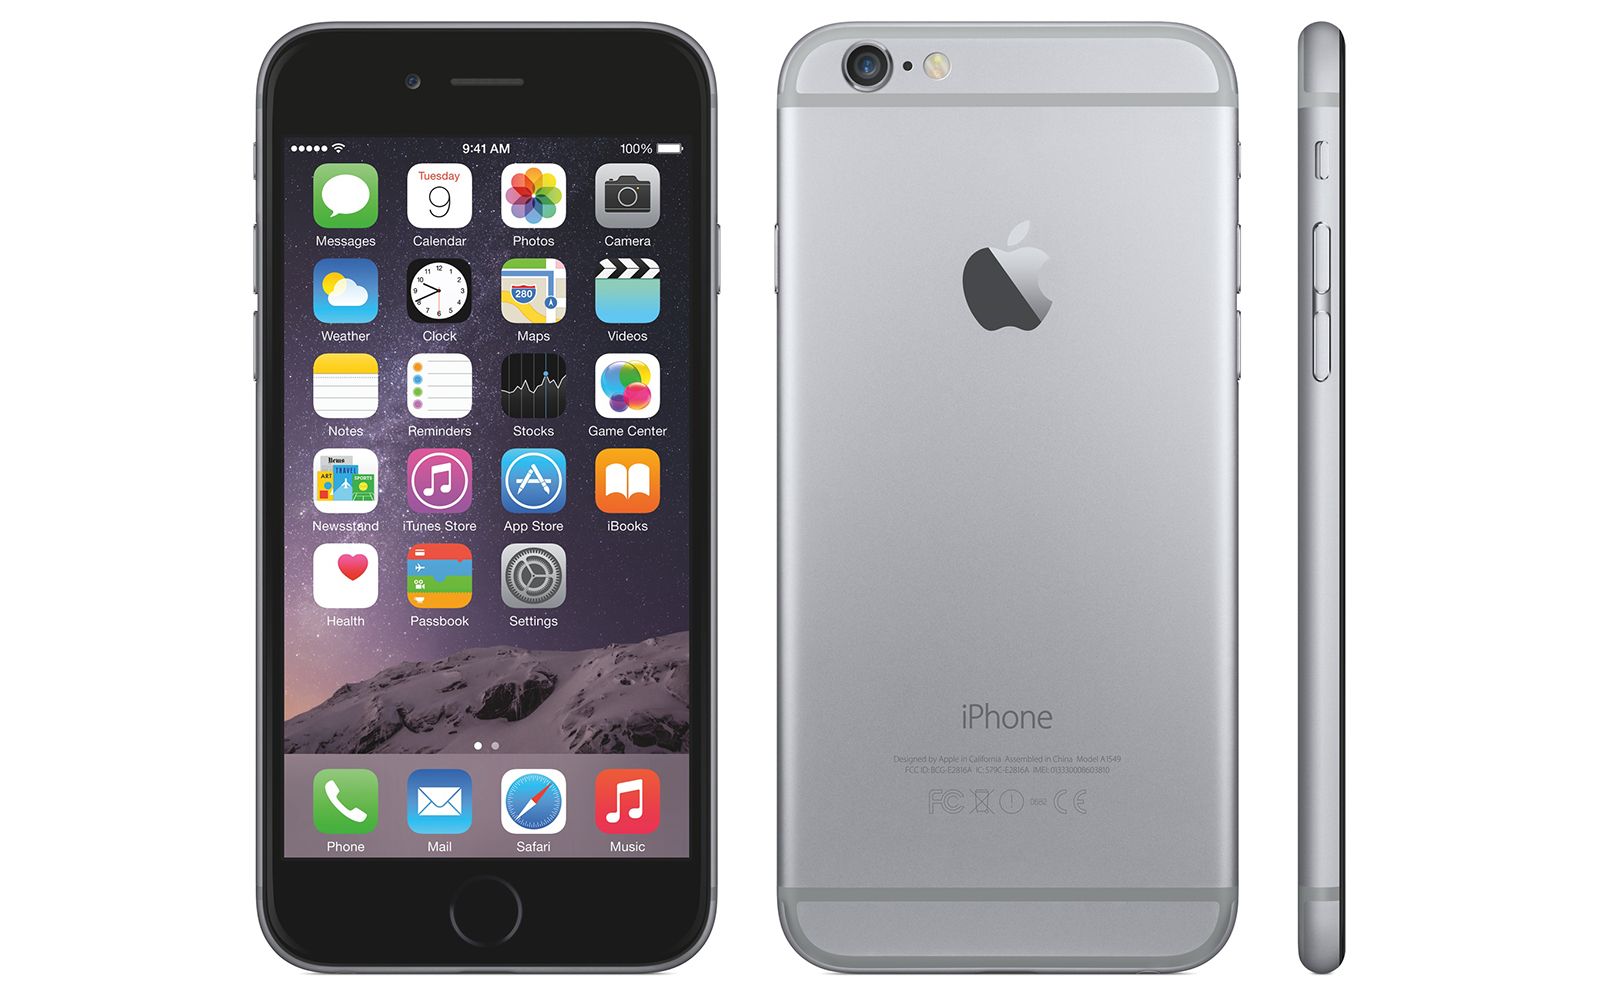 Apple iPhone SE 2 se lanzaría como iPhone 9 junto a un iPhone 9 Plus